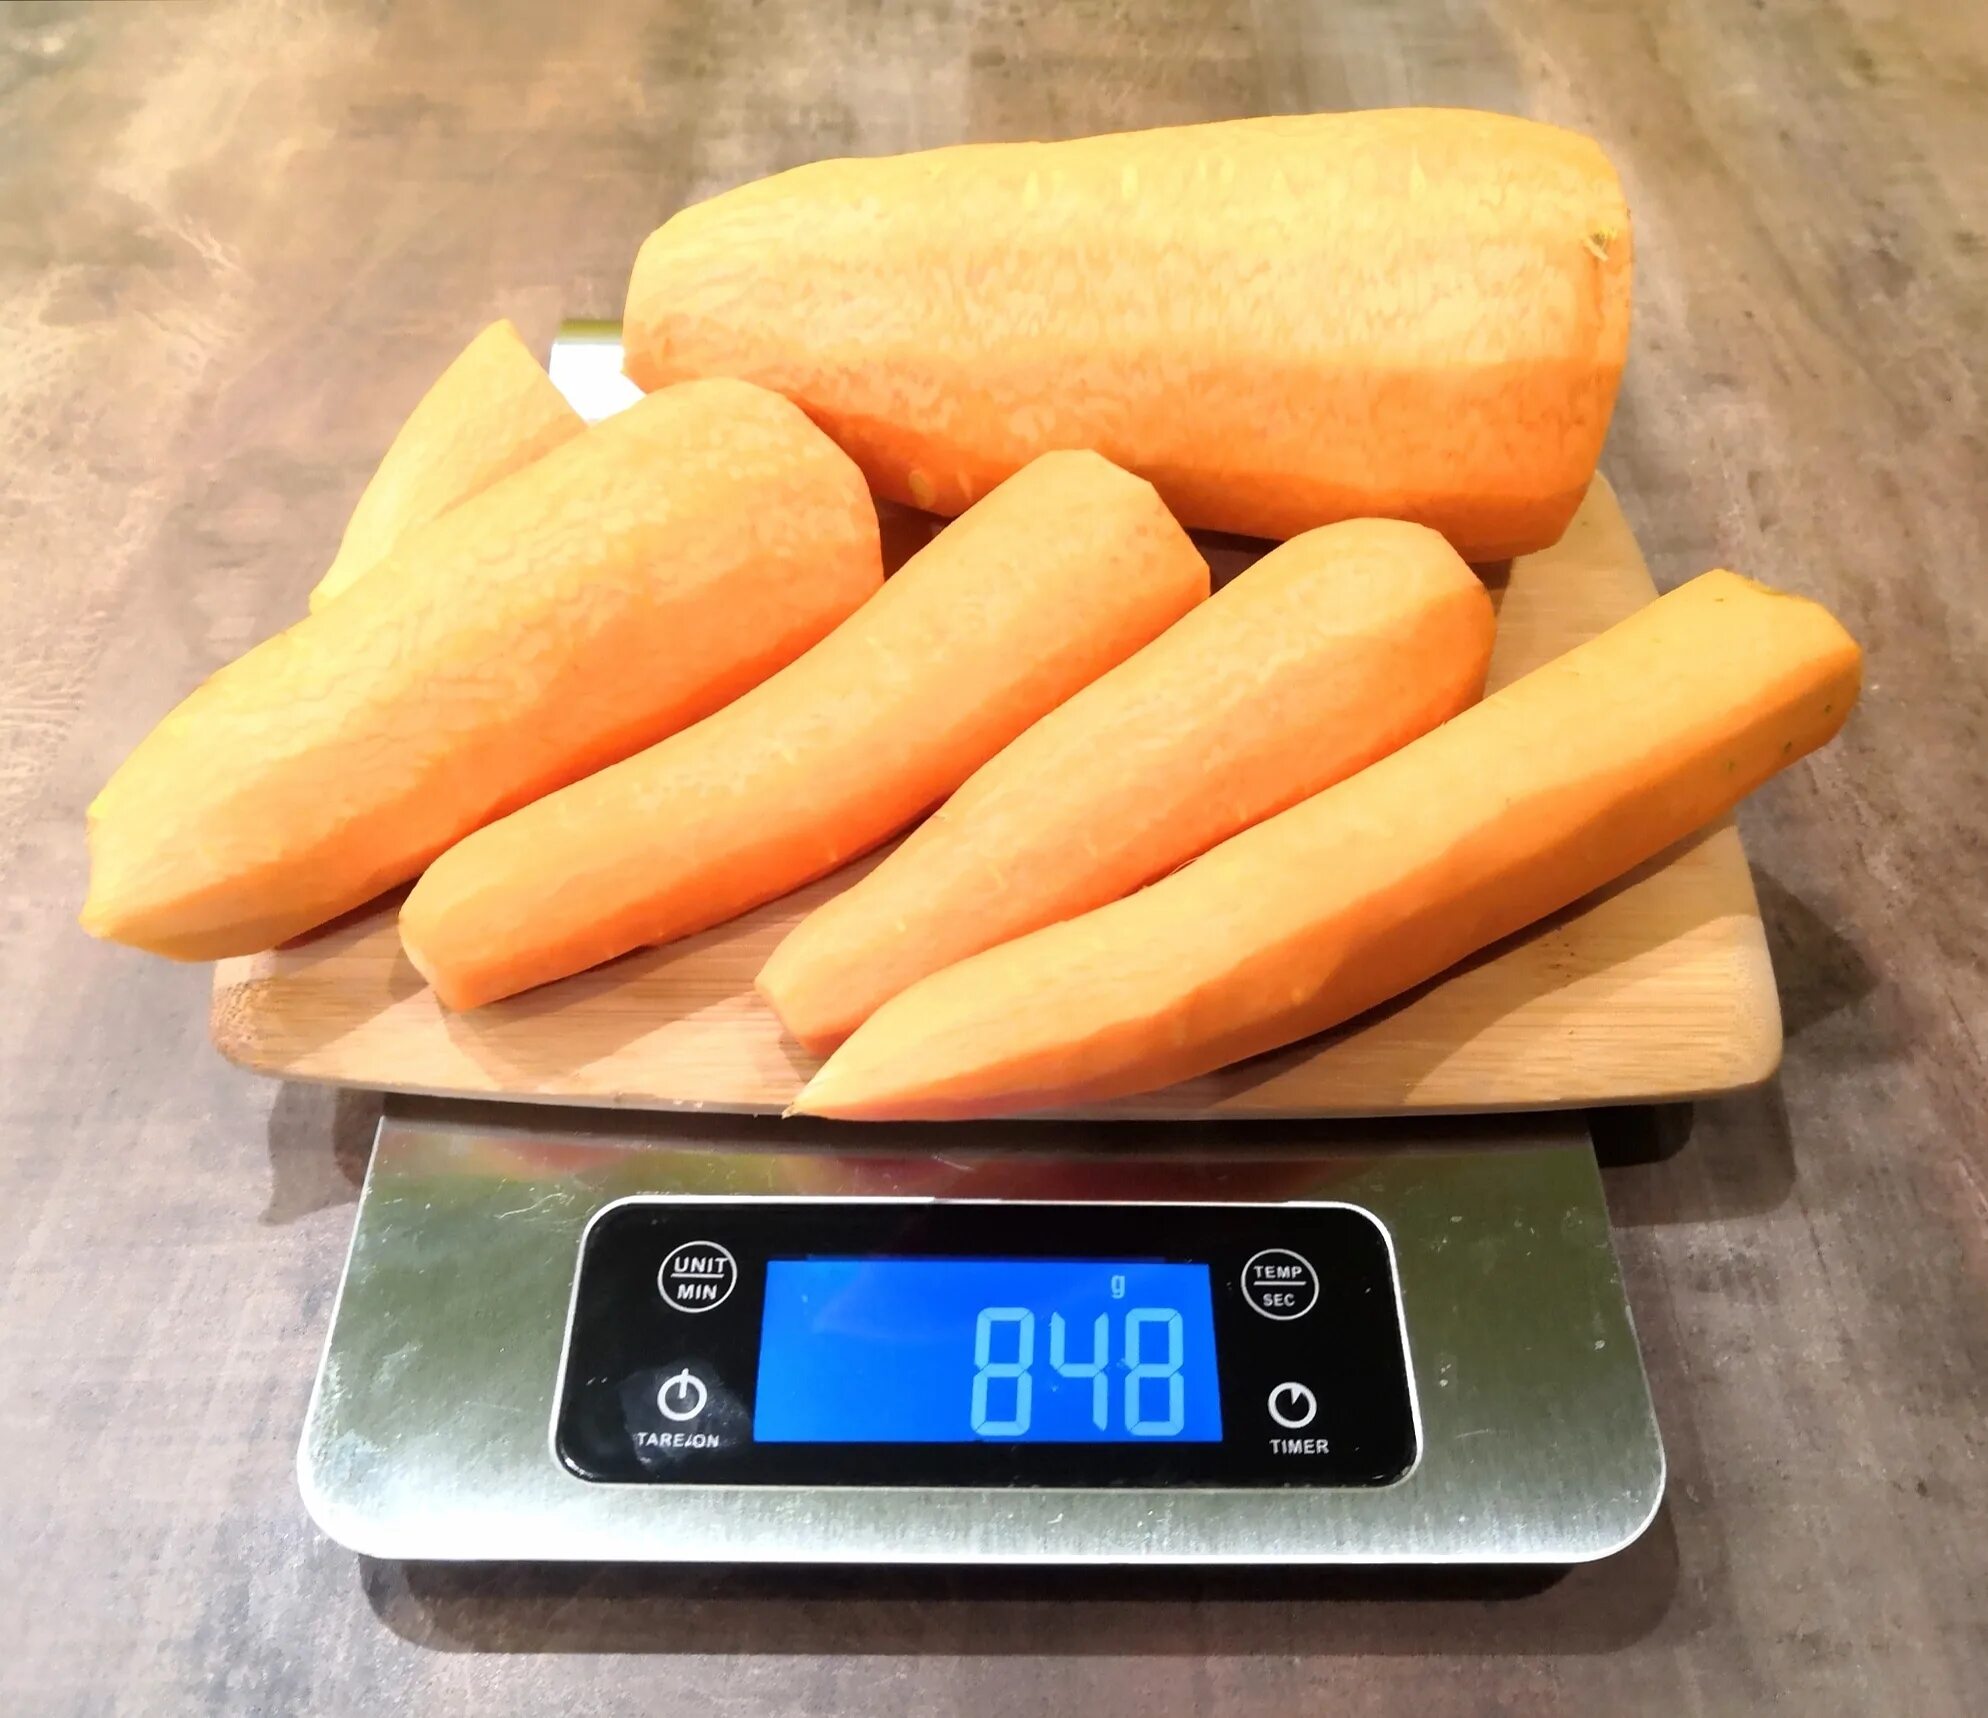 10 килограмм моркови. Килограмм моркови. Кило моркови. Морковь кг. Полкило моркови.